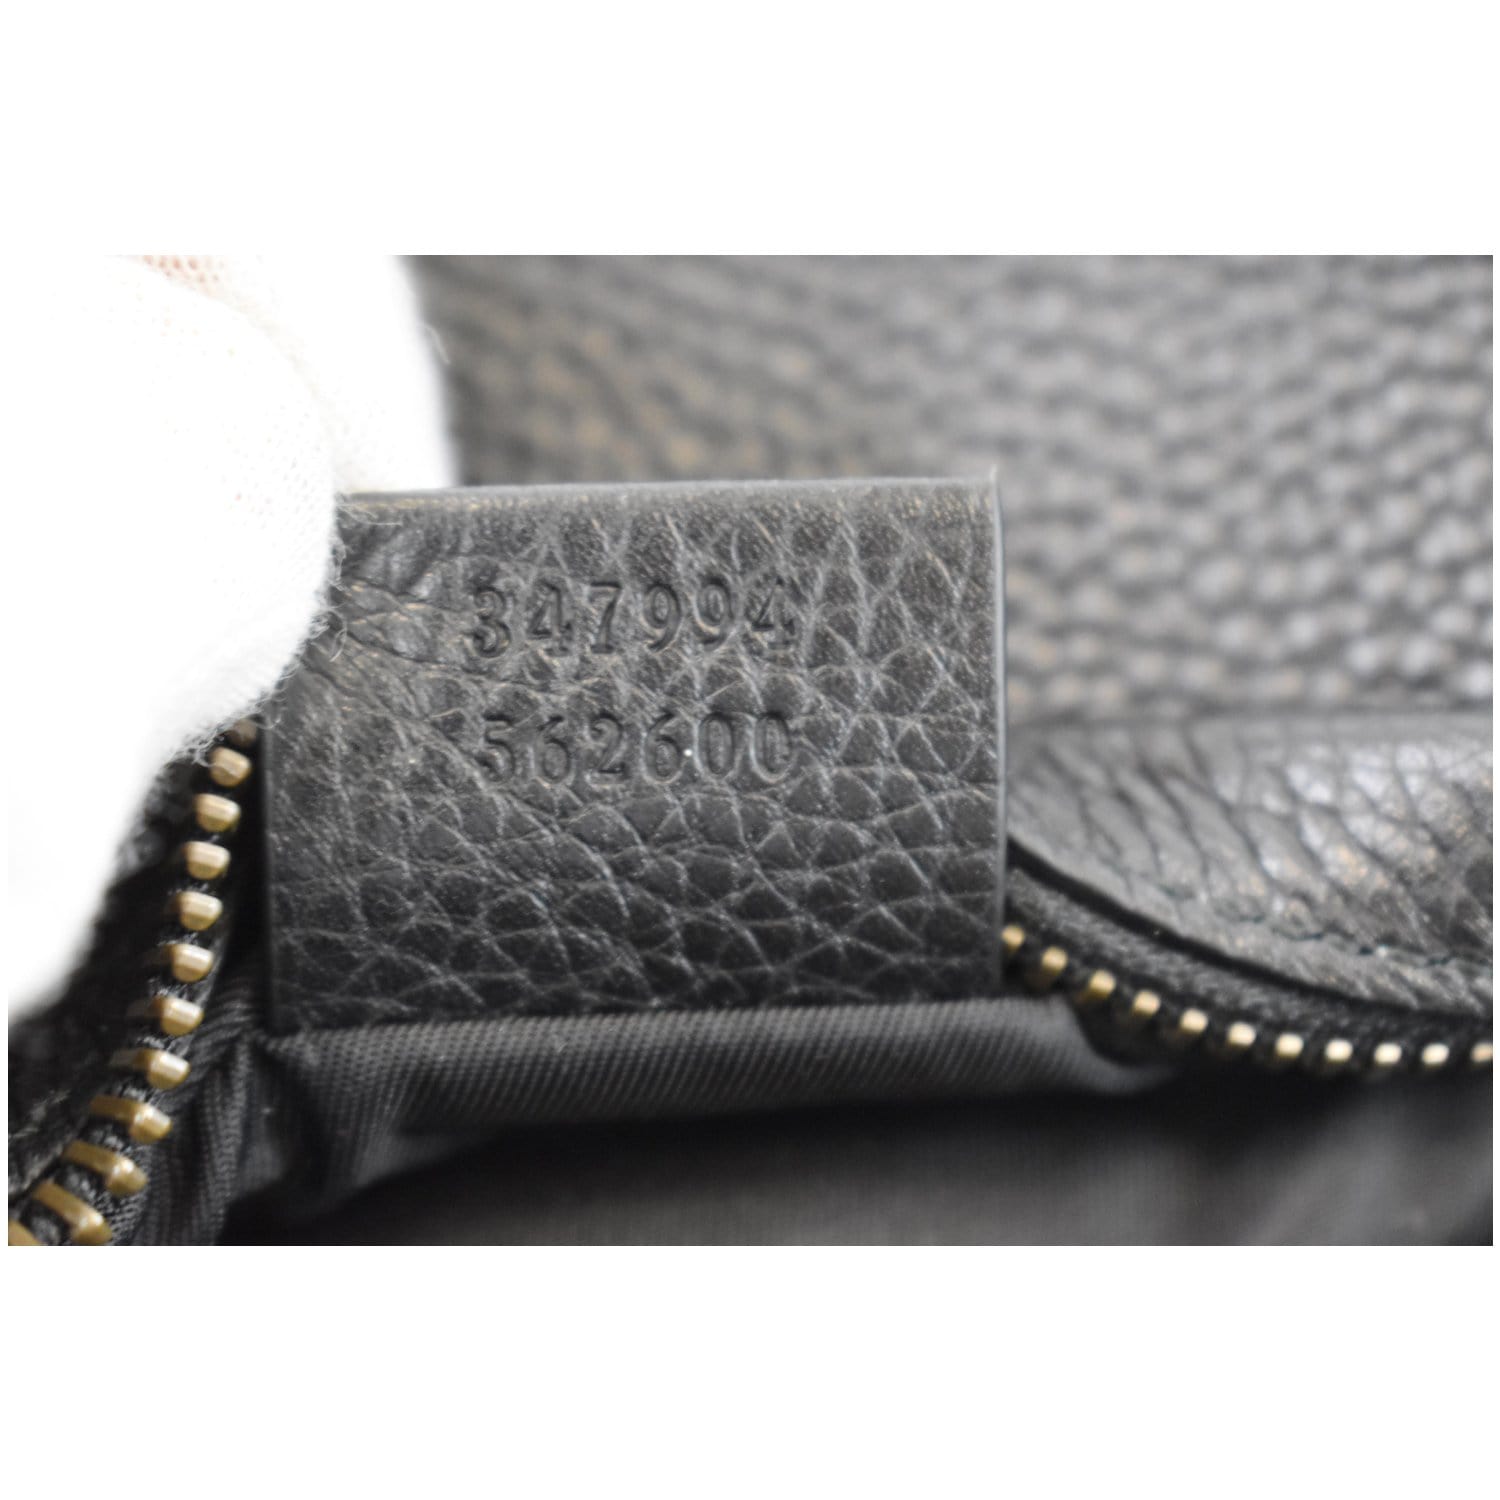 ❤️Authentic Gucci Soho Small Leather Disco Bag Black Crossbody